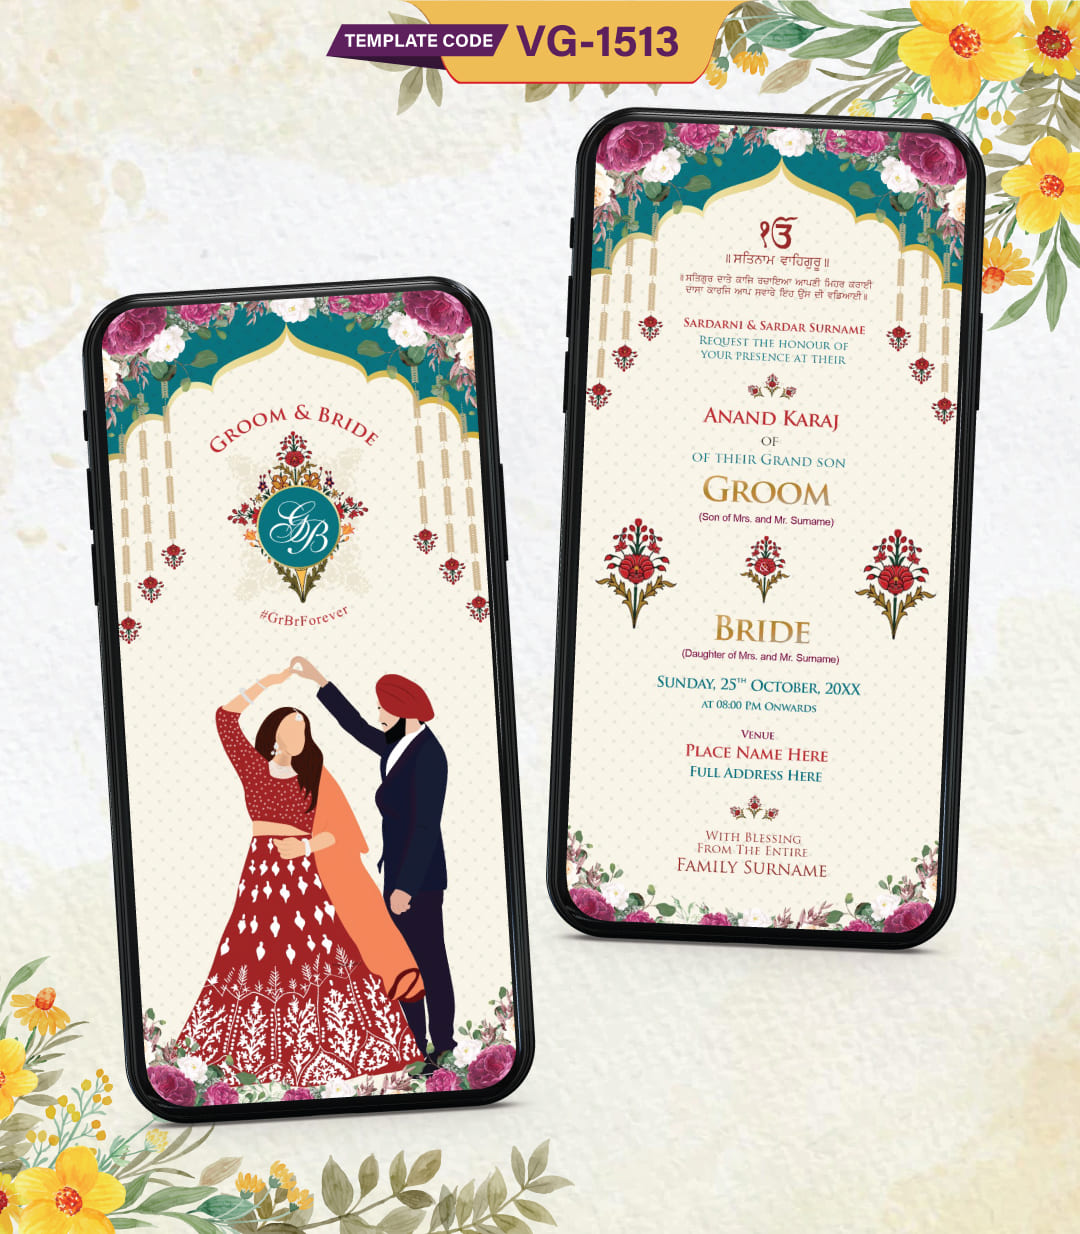 Punjabi Sikh Wedding Caricature Invitation Card